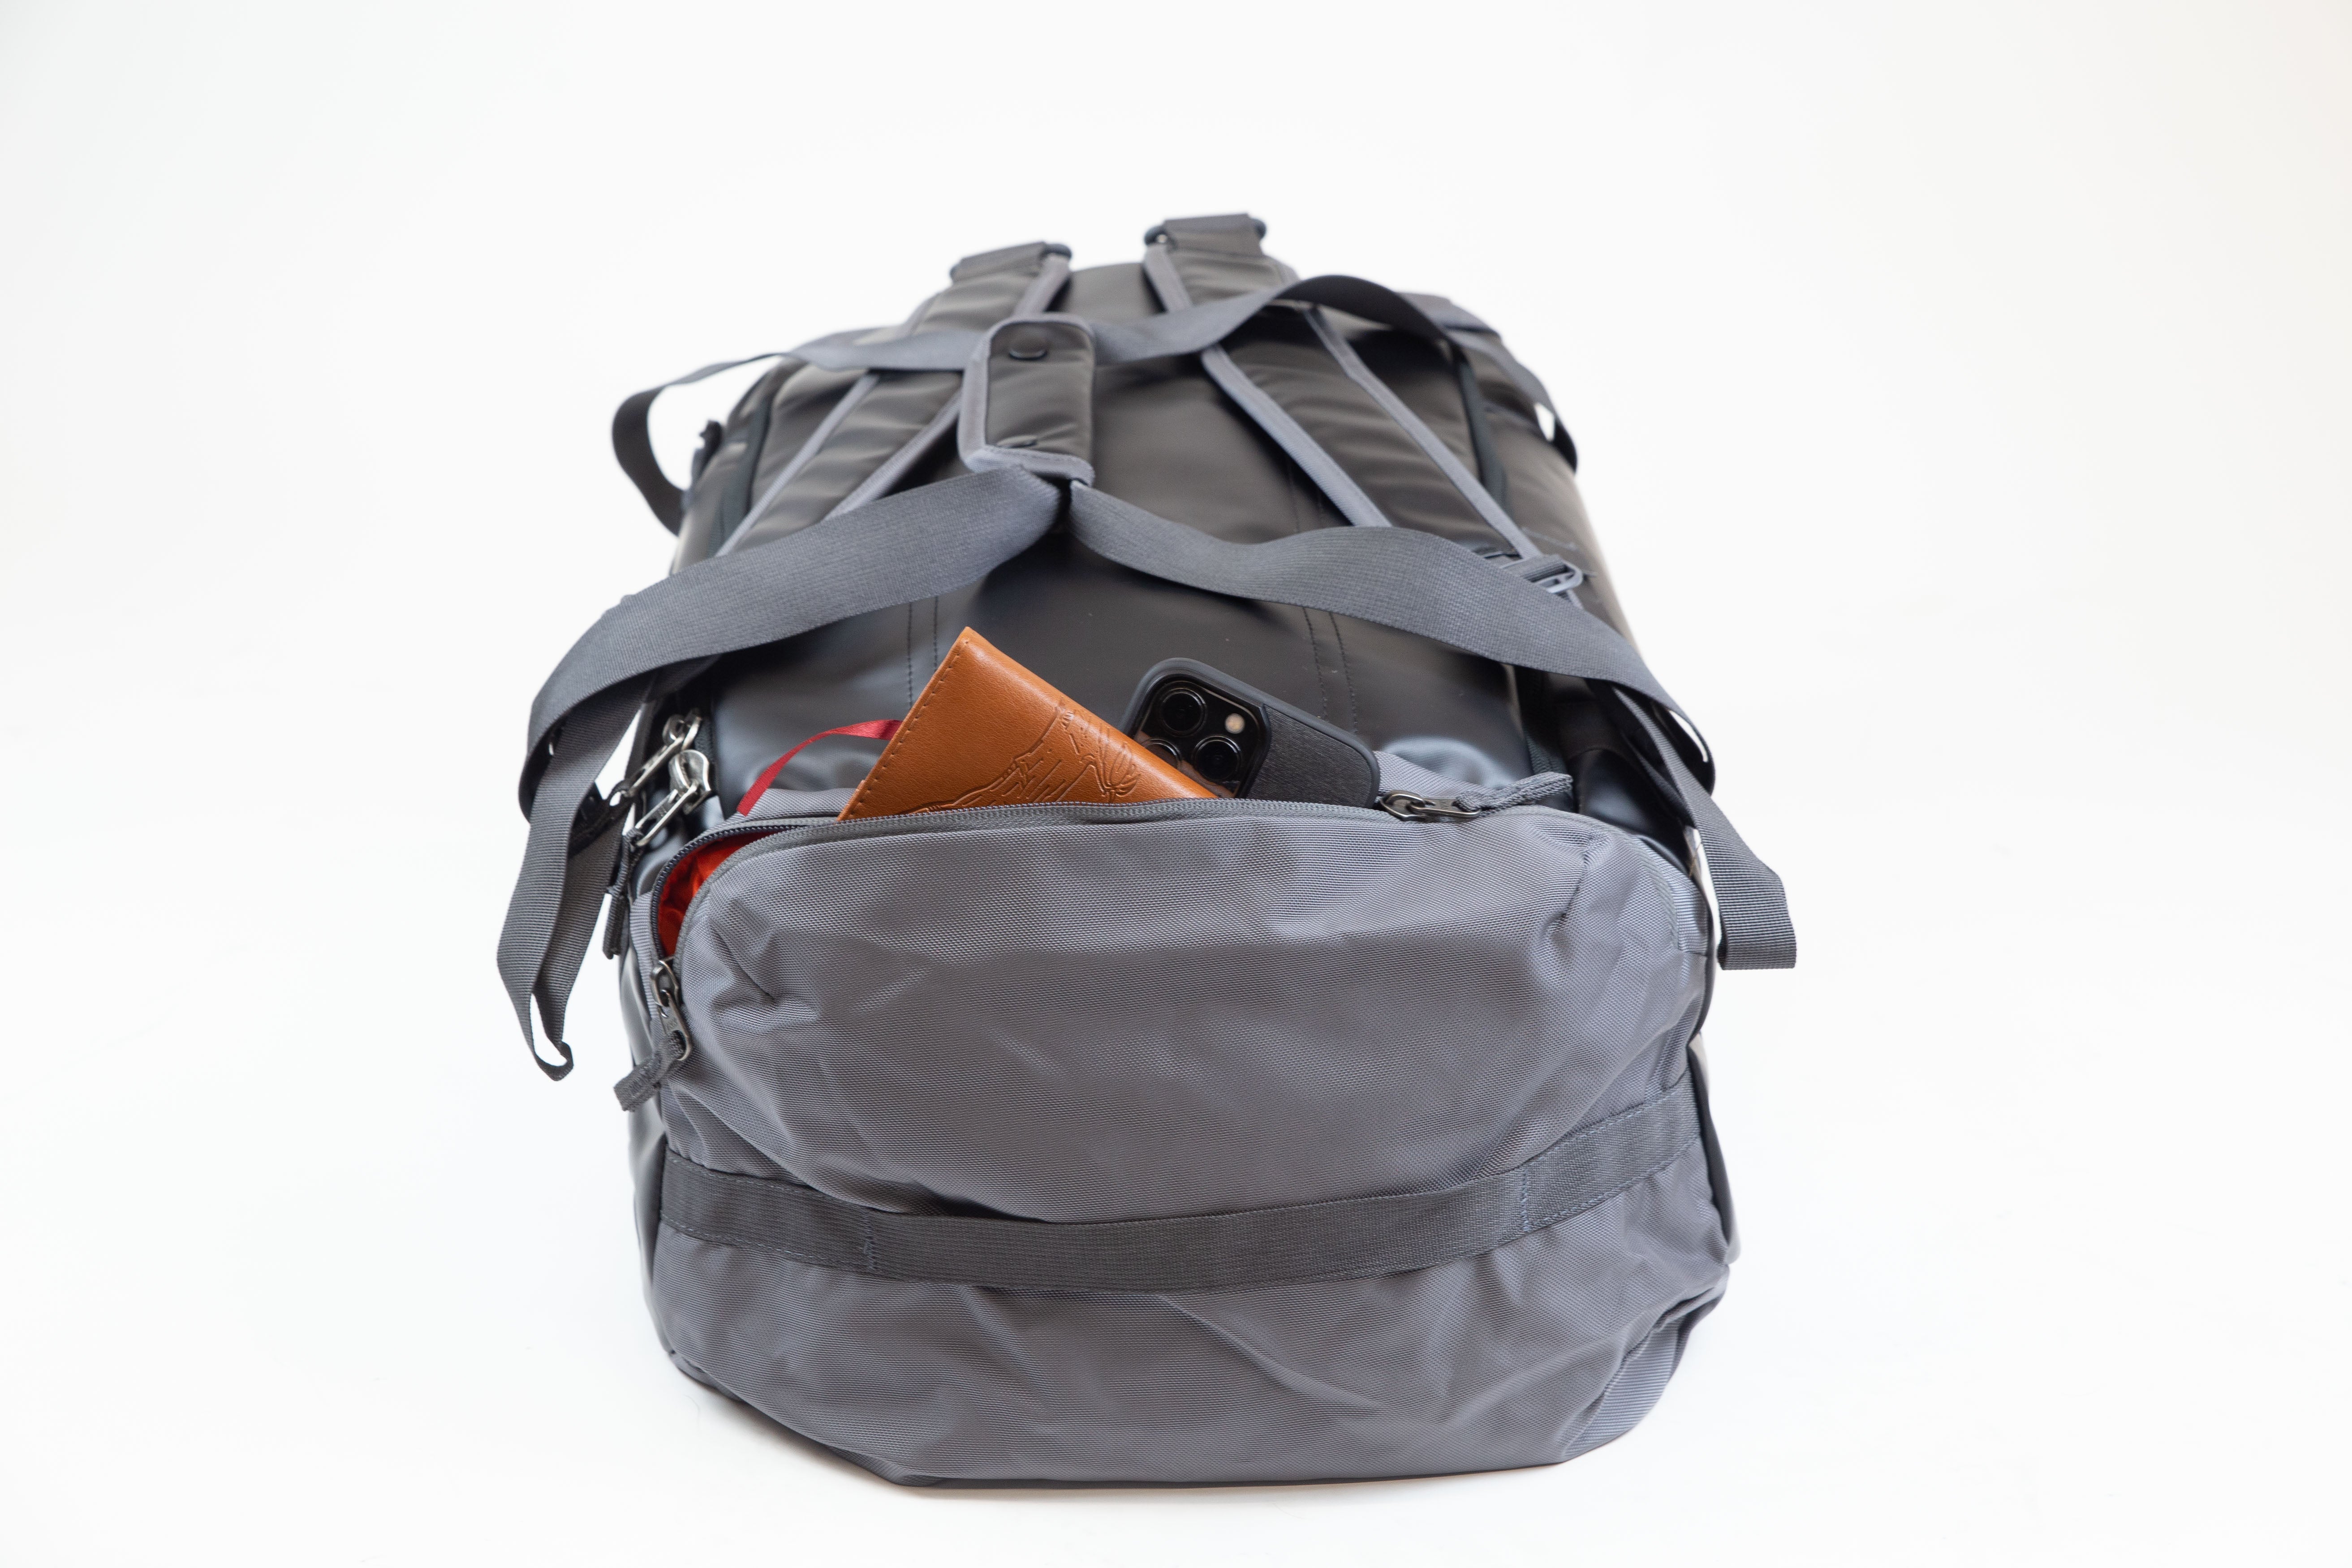 Duffle Bag Apparel &amp; Accessories Coalatree 